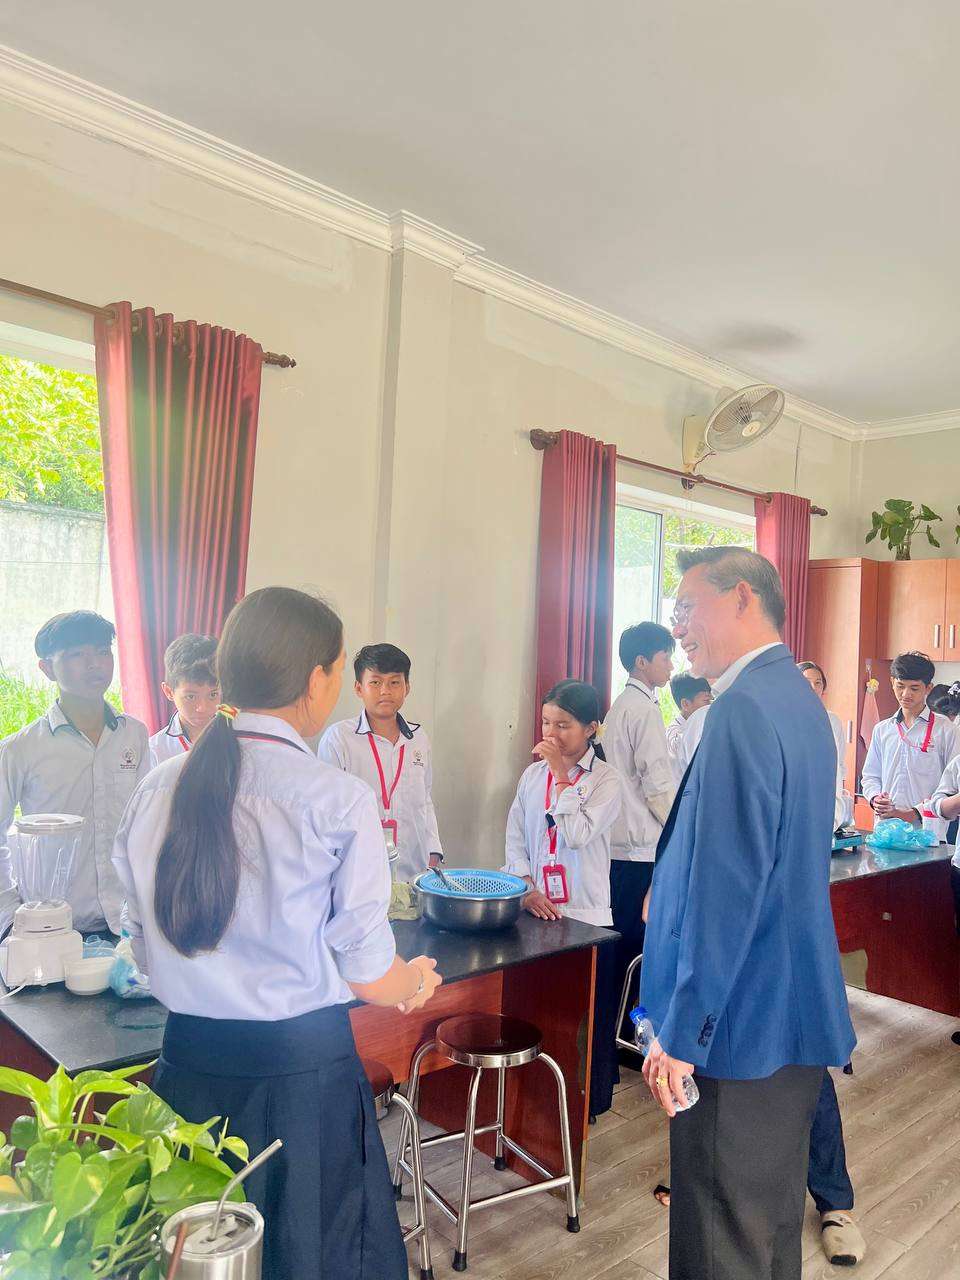 Vice Chancellor visit to Prek Leap HS in June 24.